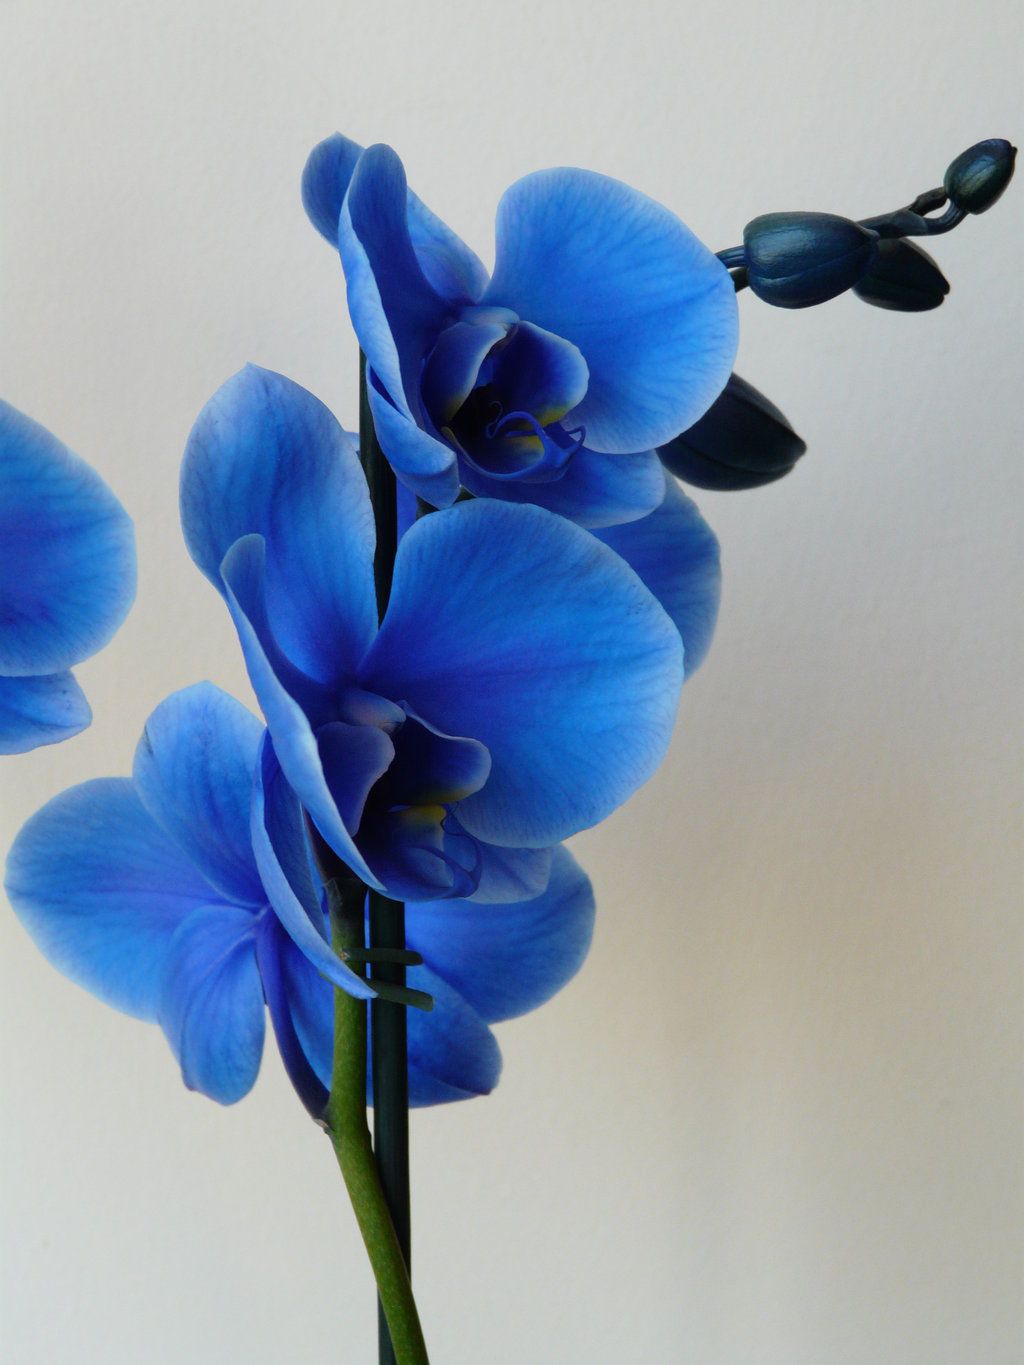 Blue Orchid Wallpaper HD. Orchid wallpaper, Blue flower wallpaper, Blue orchid flower